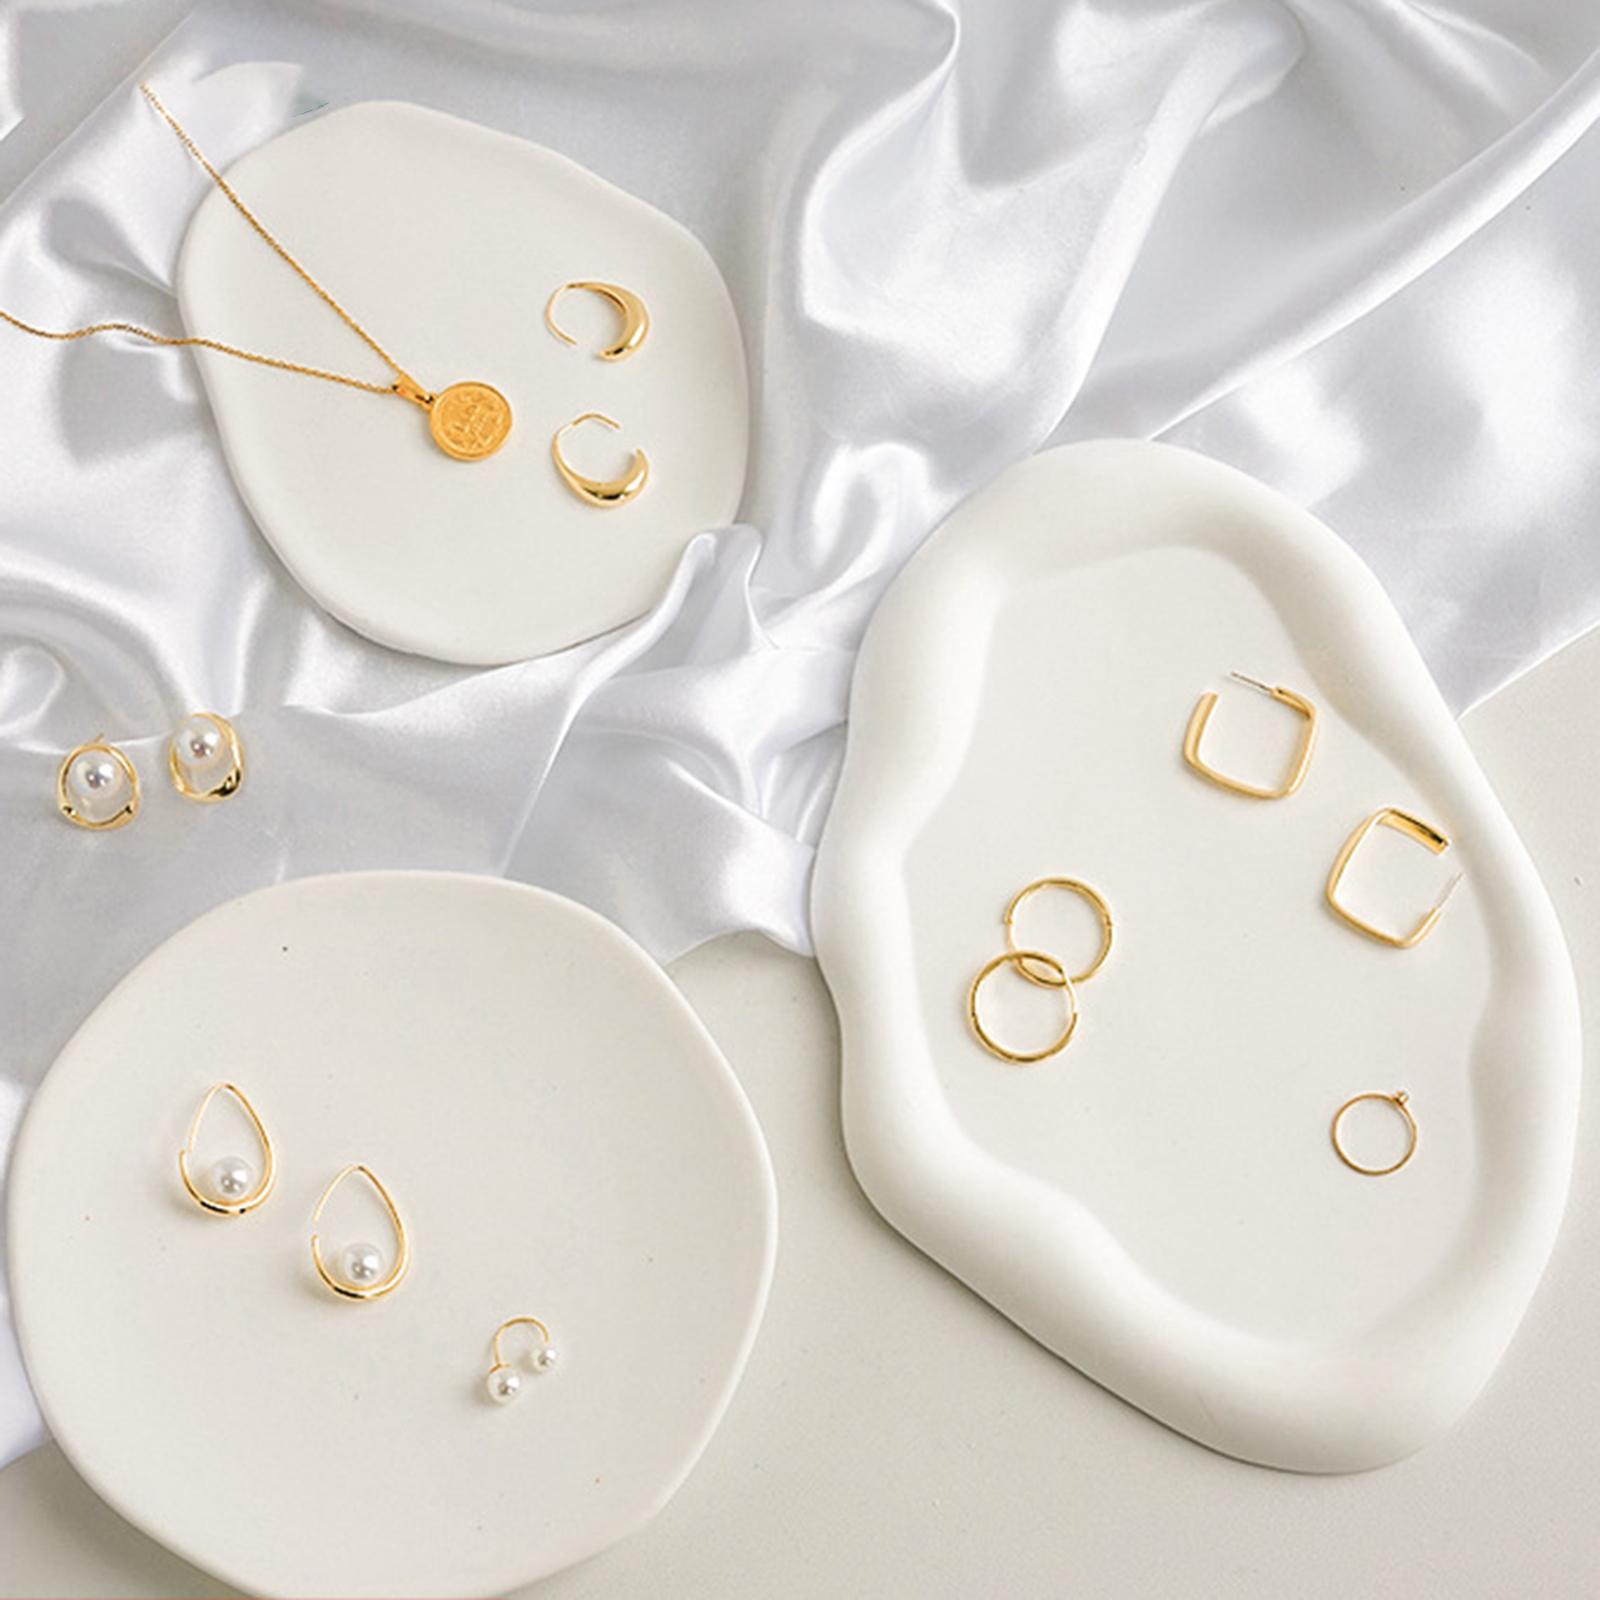 Decorative Jewelry Trays Display Plate Makeup Toiletries Plaster Vanity Tray Style A 14.5x12cm